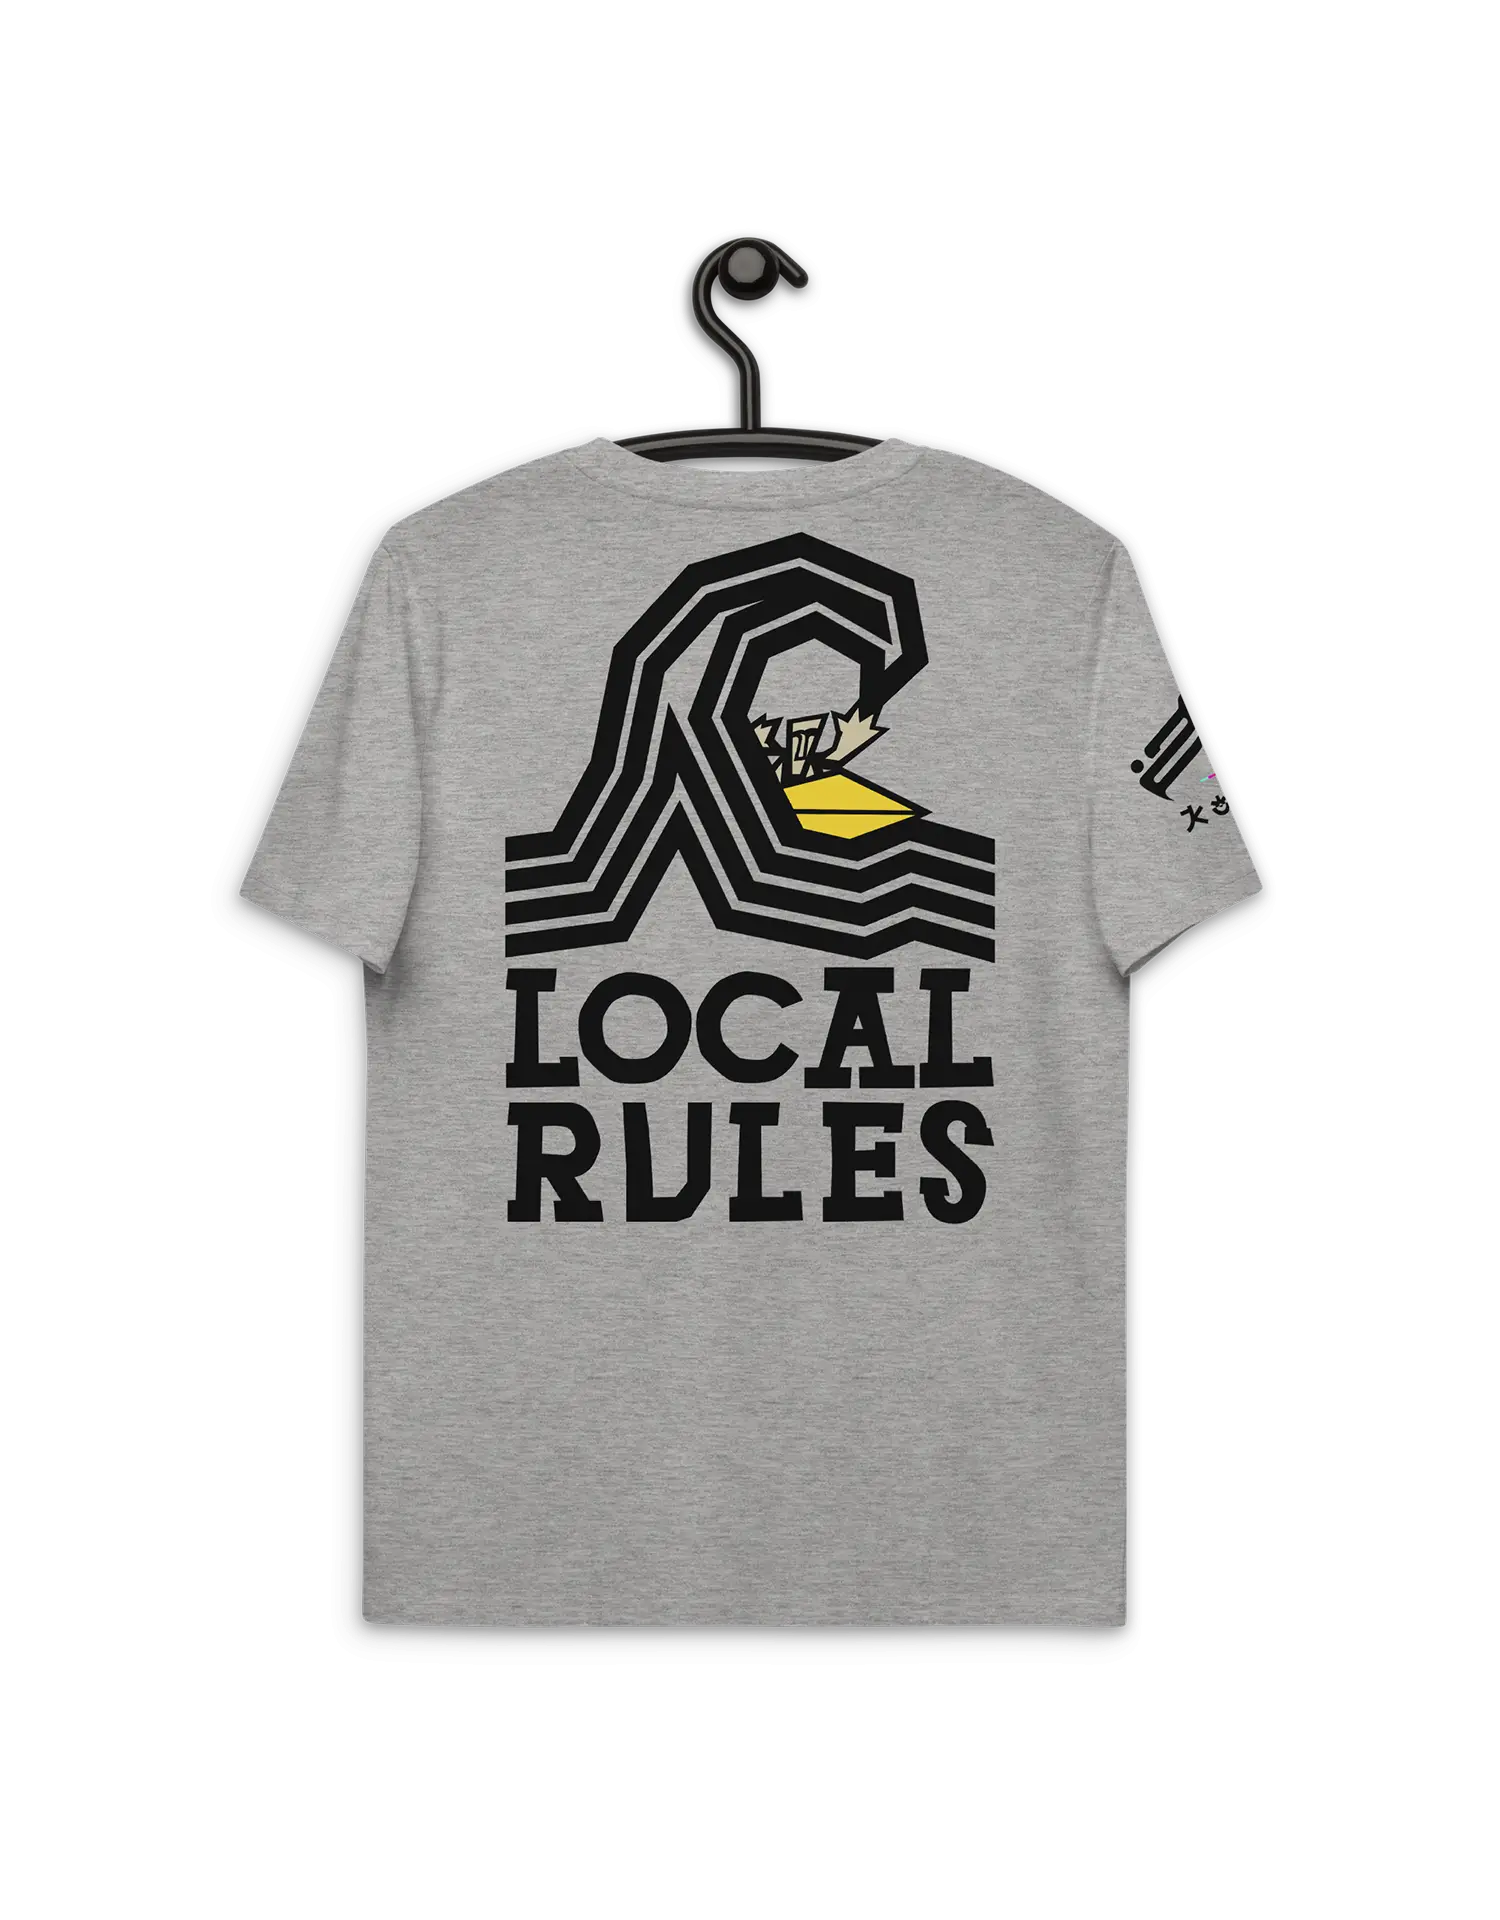 Local Rules Heather Grey Premium Organic Cotton Eco-friendly T-Shirt by KOAV